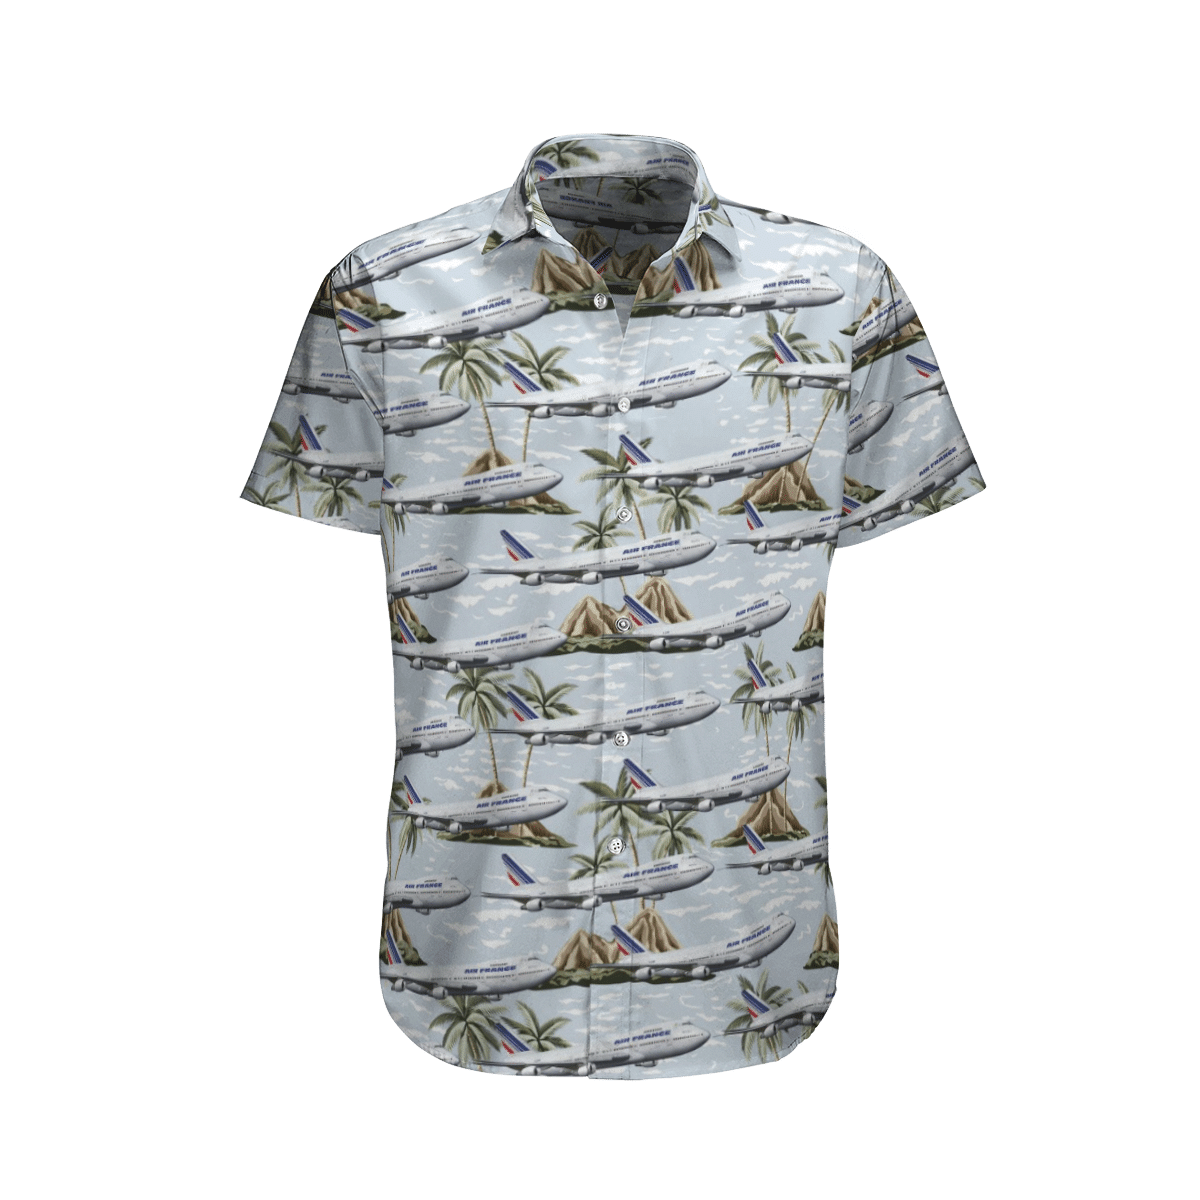 Enjoy your summer with top cool hawaiian shirt below 196